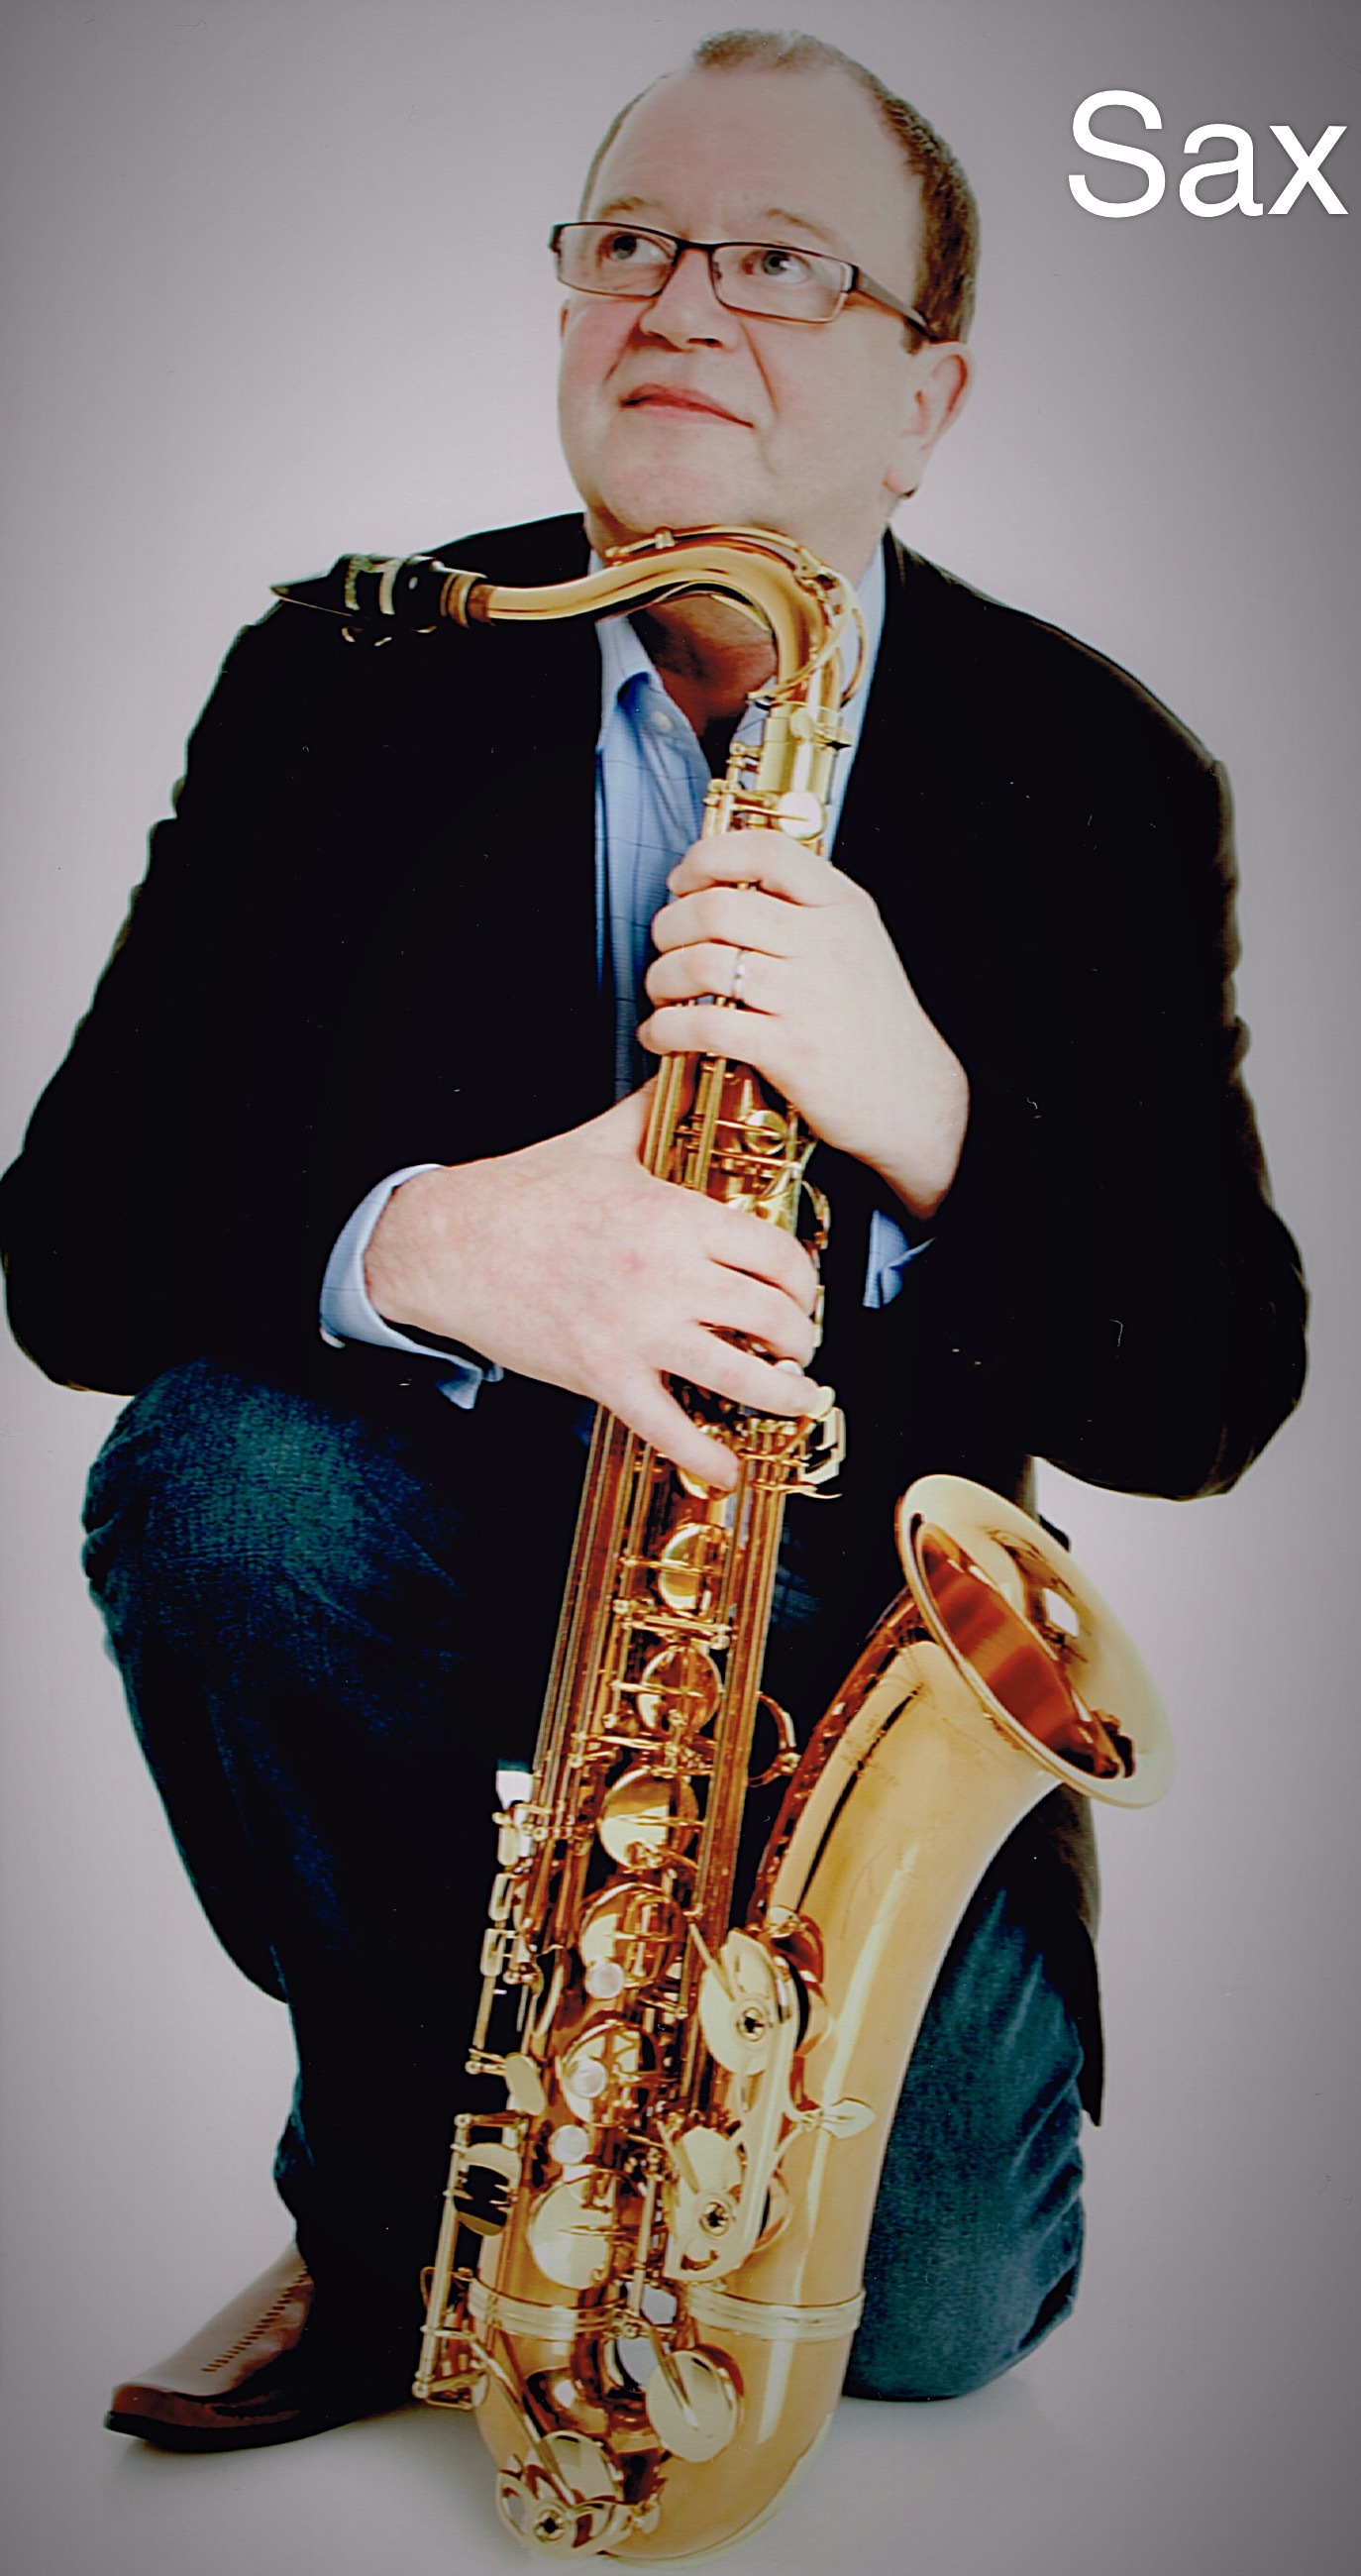 Saxophonist Ken in Penrith, Cumbria